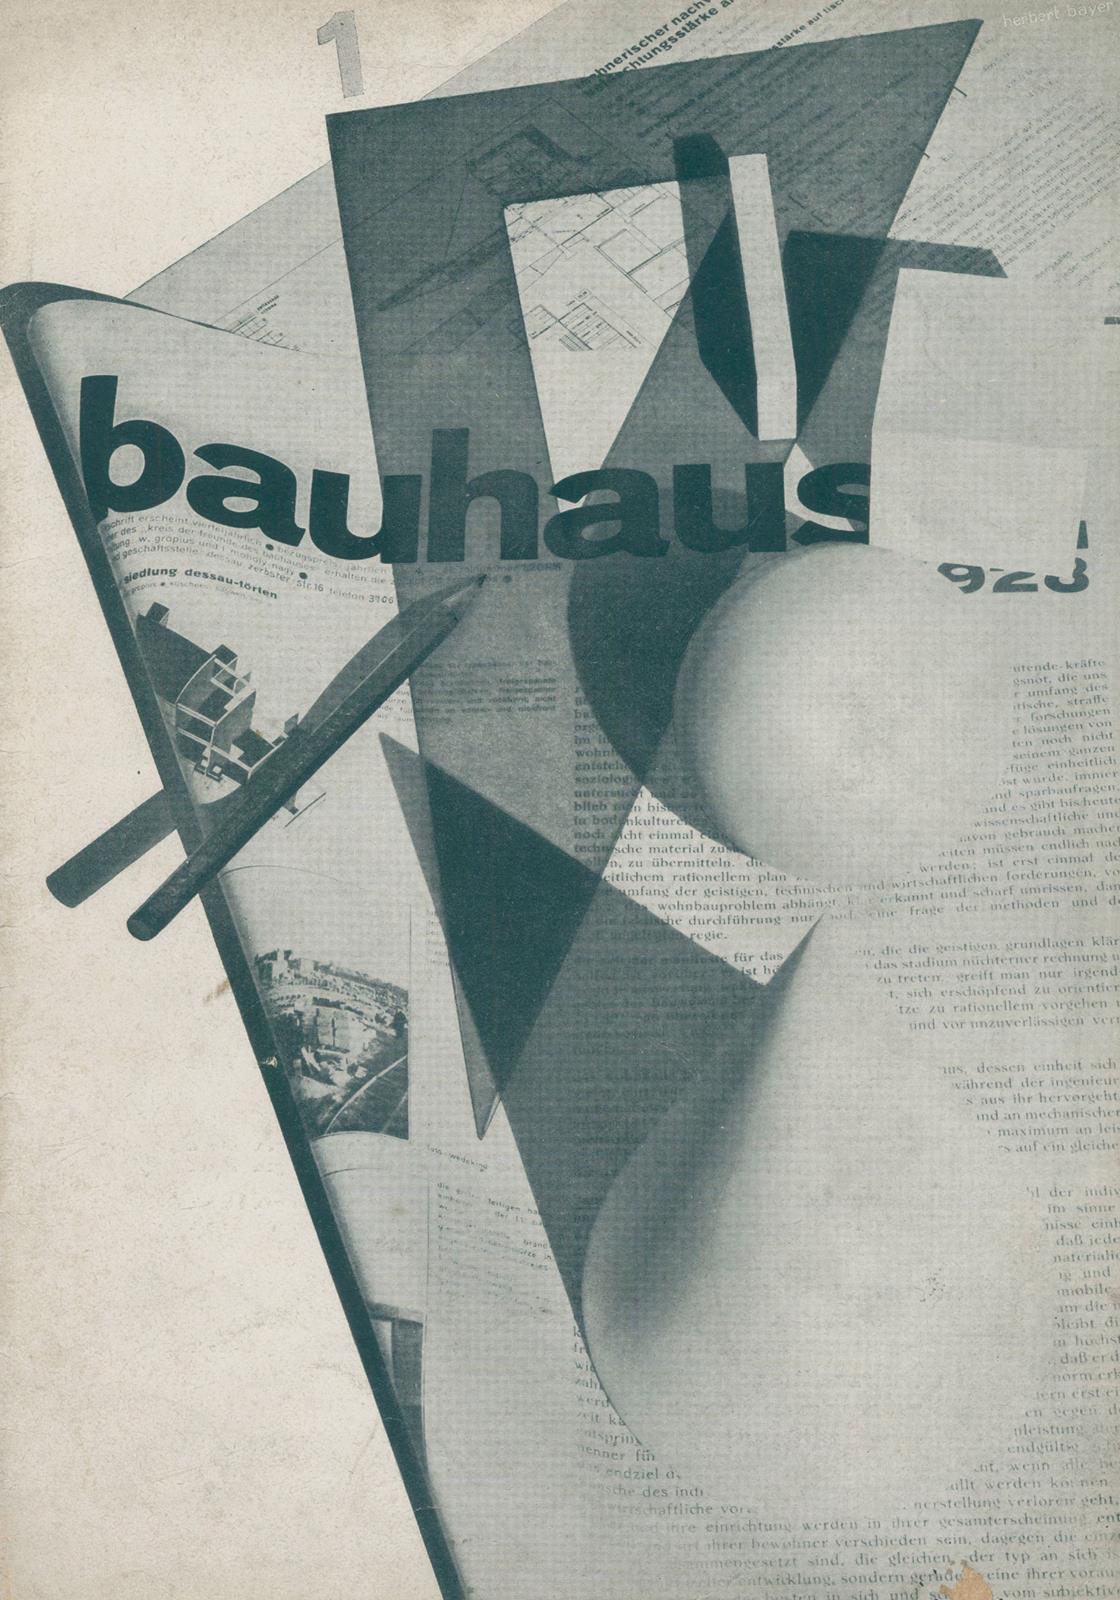 Bauhaus. | Bild Nr.1